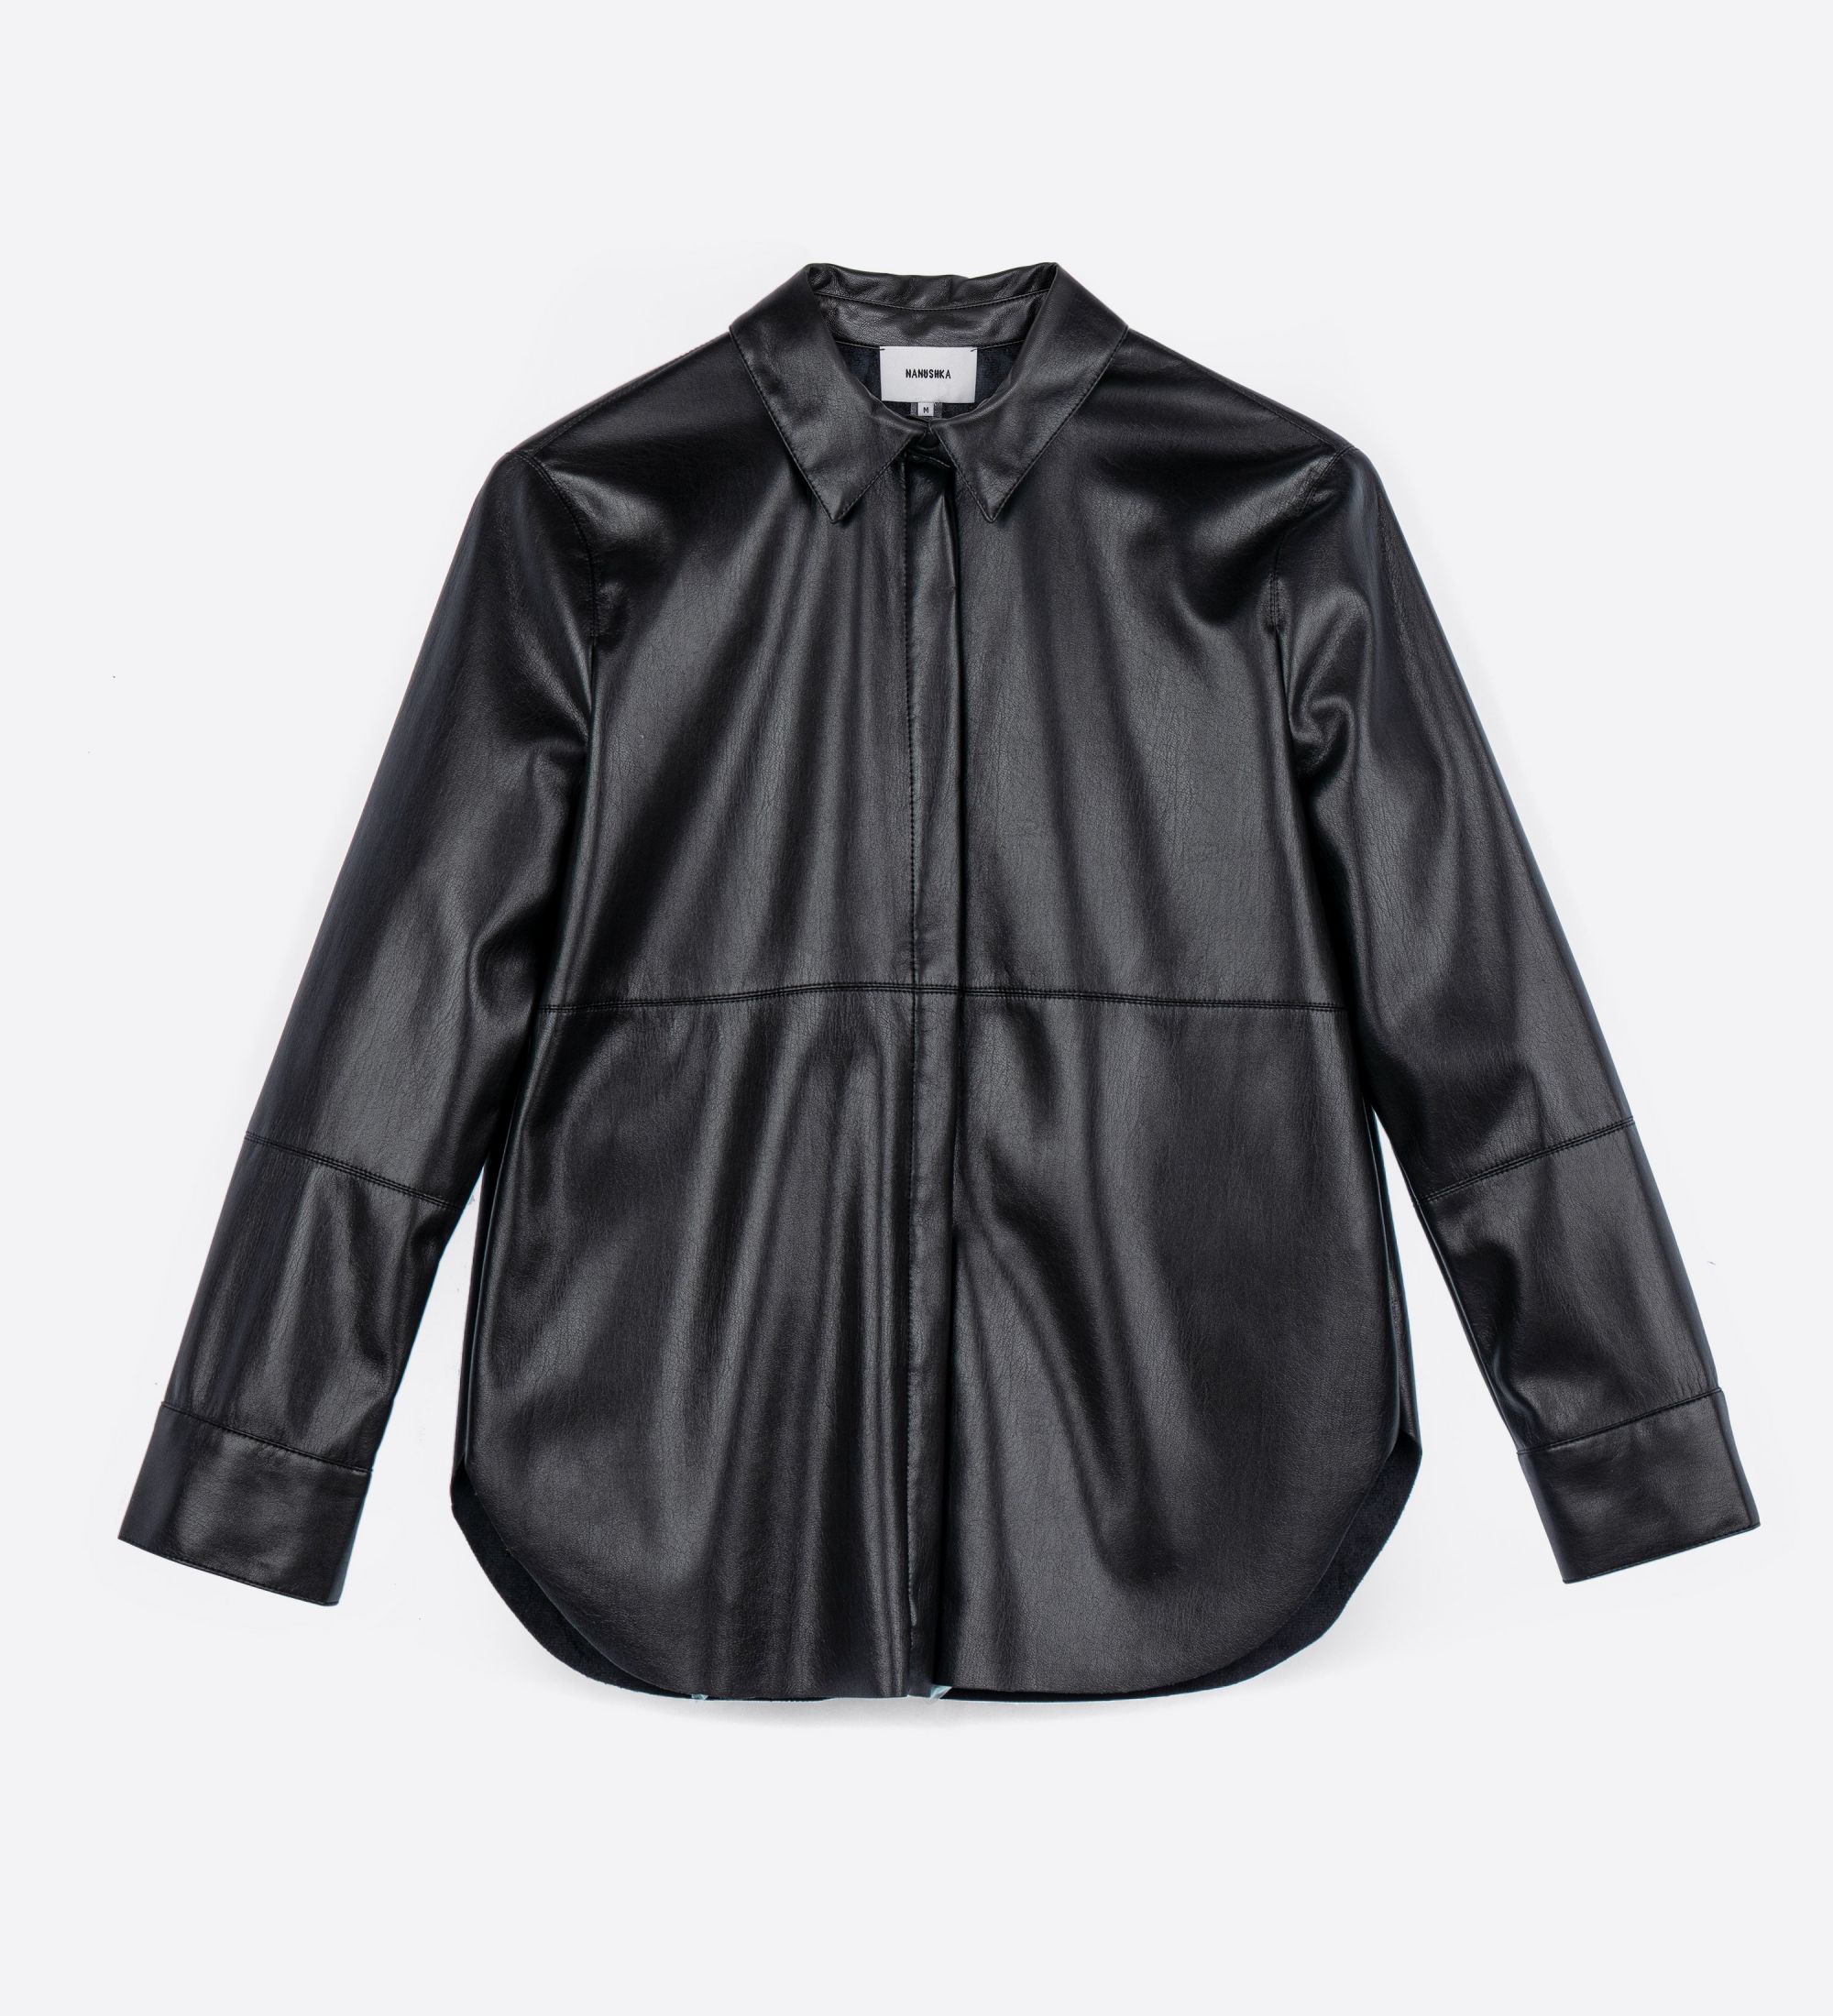 LEEZ Women Leather Shirt - Black